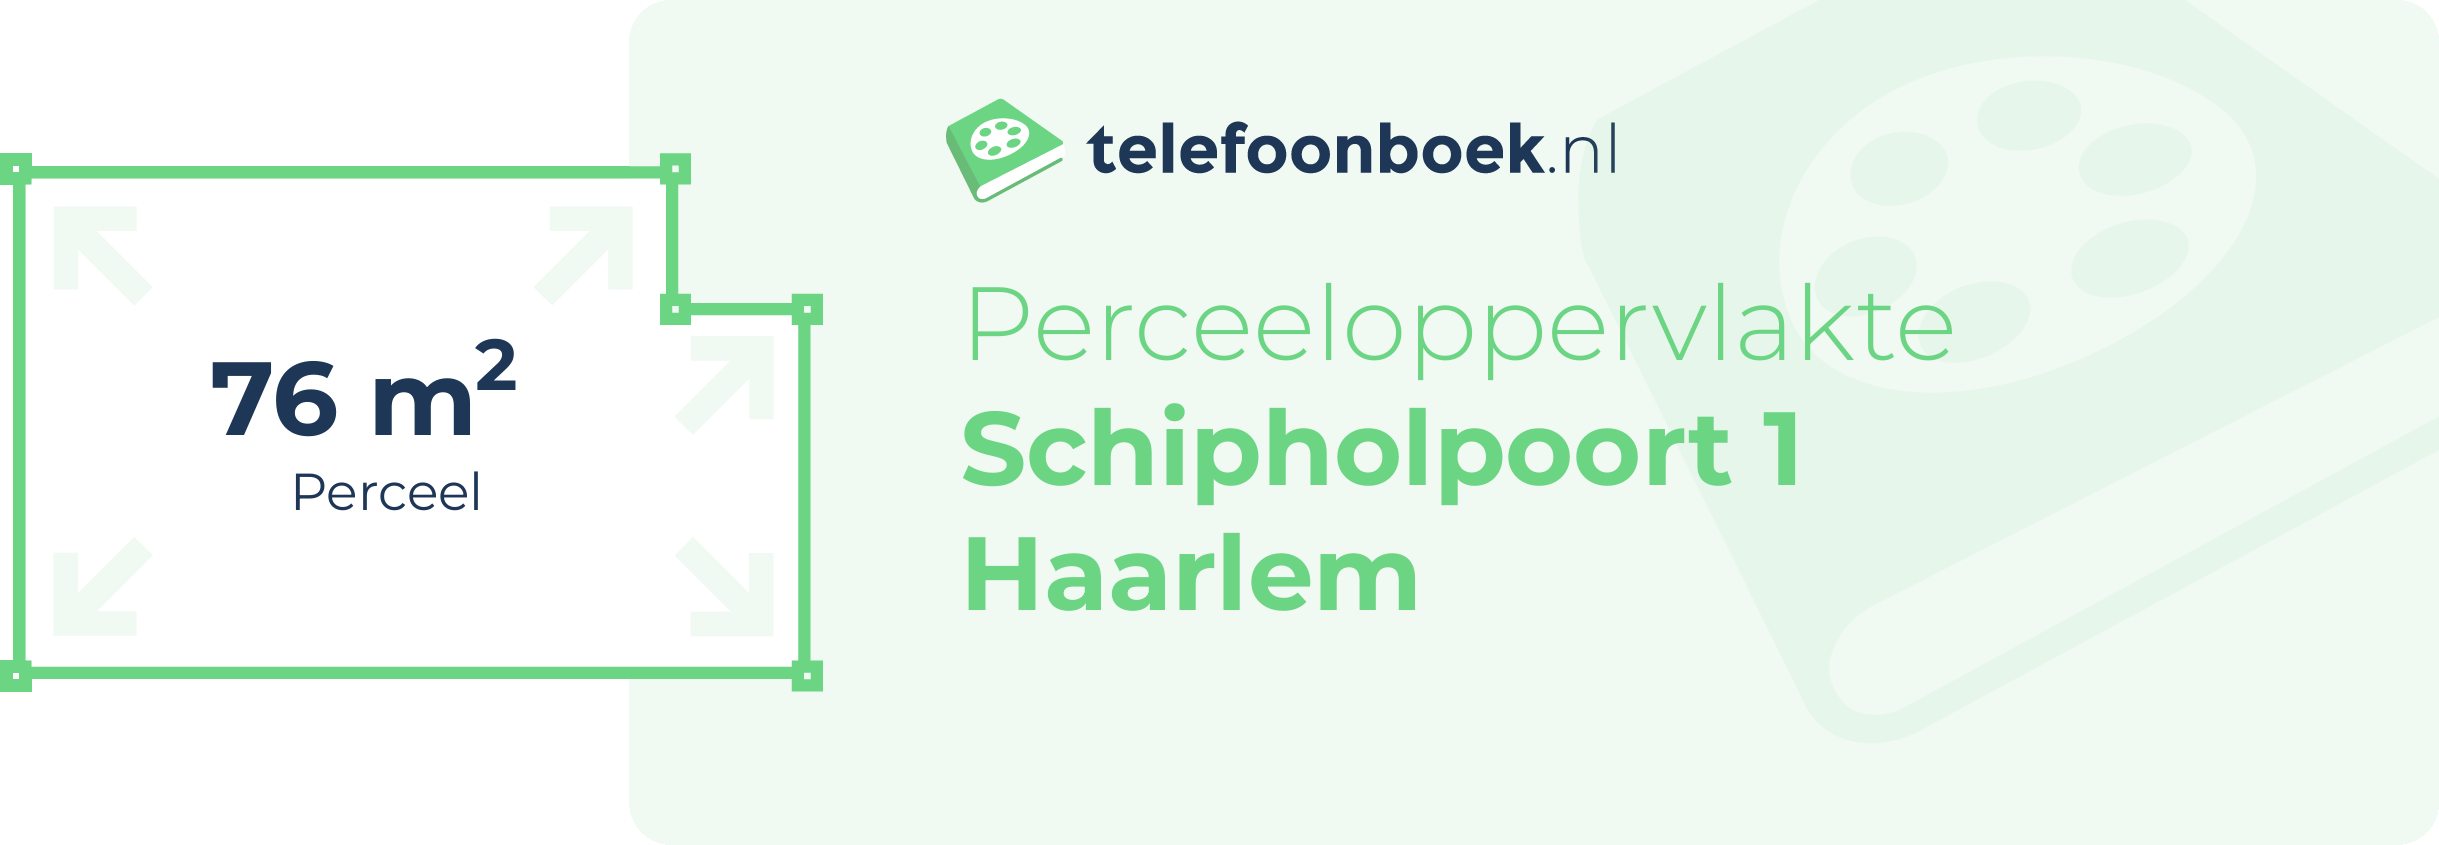 Perceeloppervlakte Schipholpoort 1 Haarlem